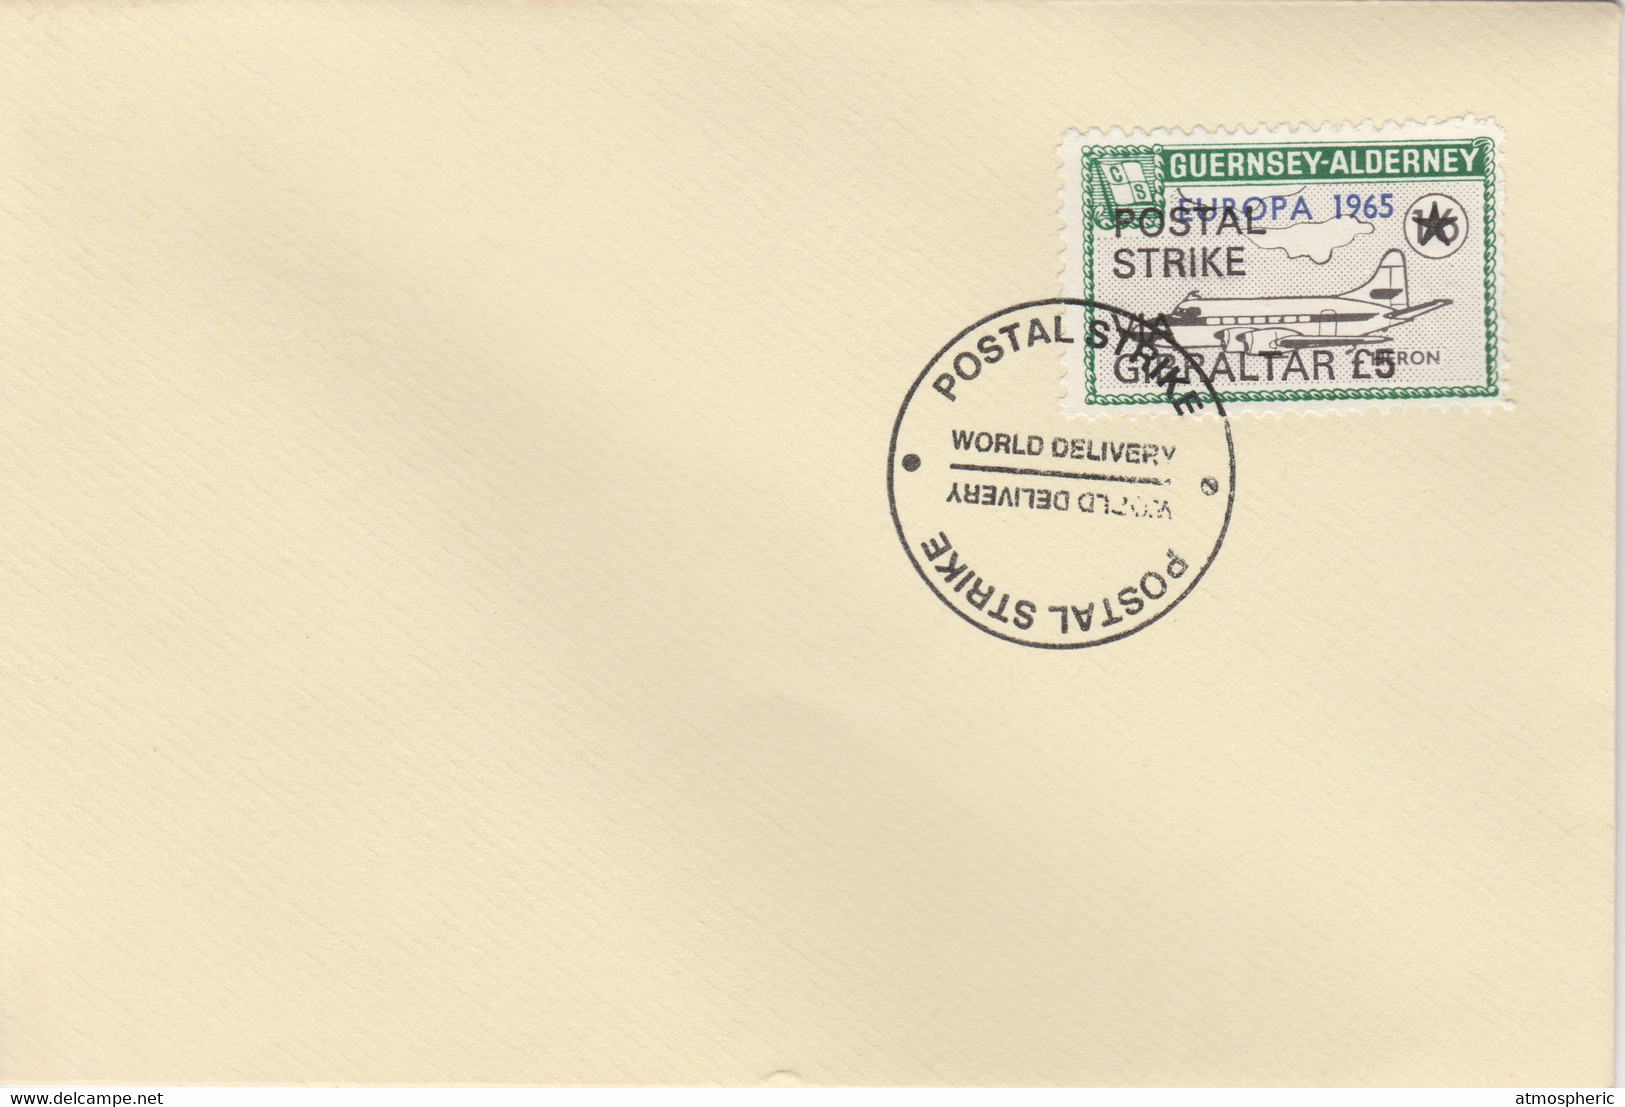 Guernsey - Alderney 1971 Postal Strike Cover To Gibraltar Bearing Heron 1s6d Overprinted Europa 1965 - Unclassified